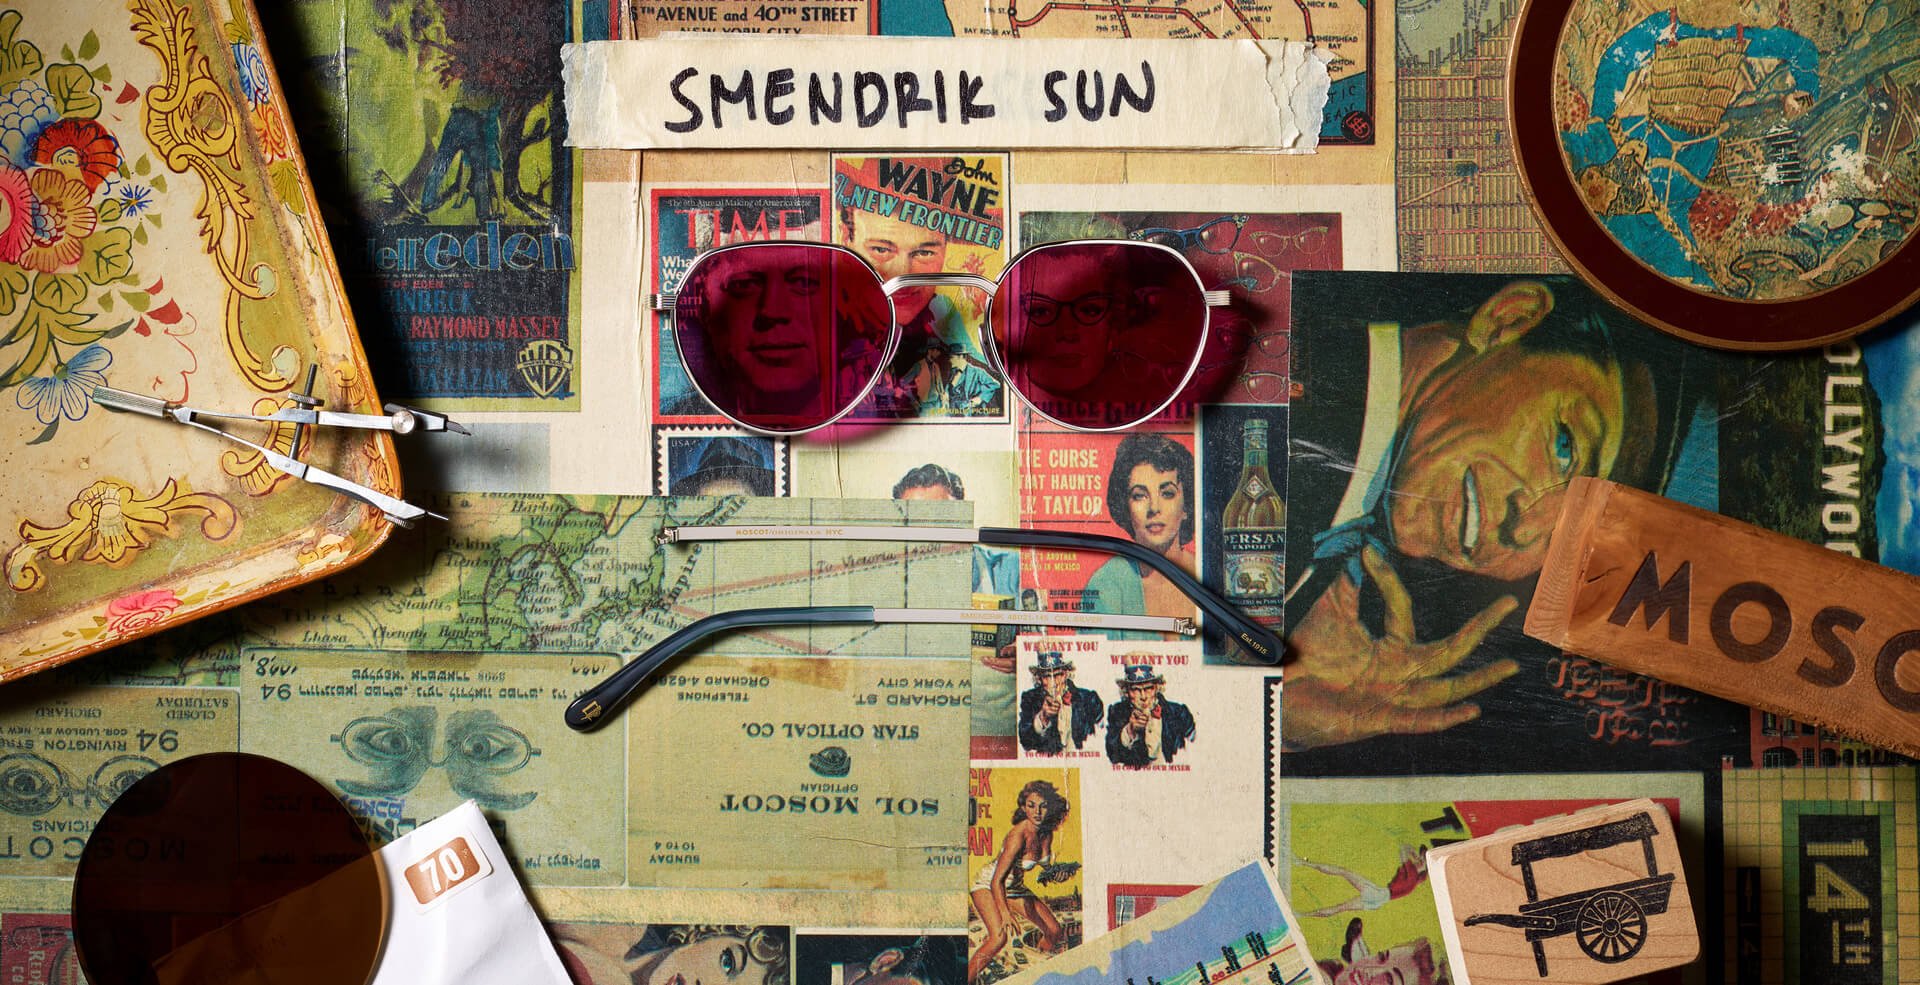 The SMENDRIK SUN